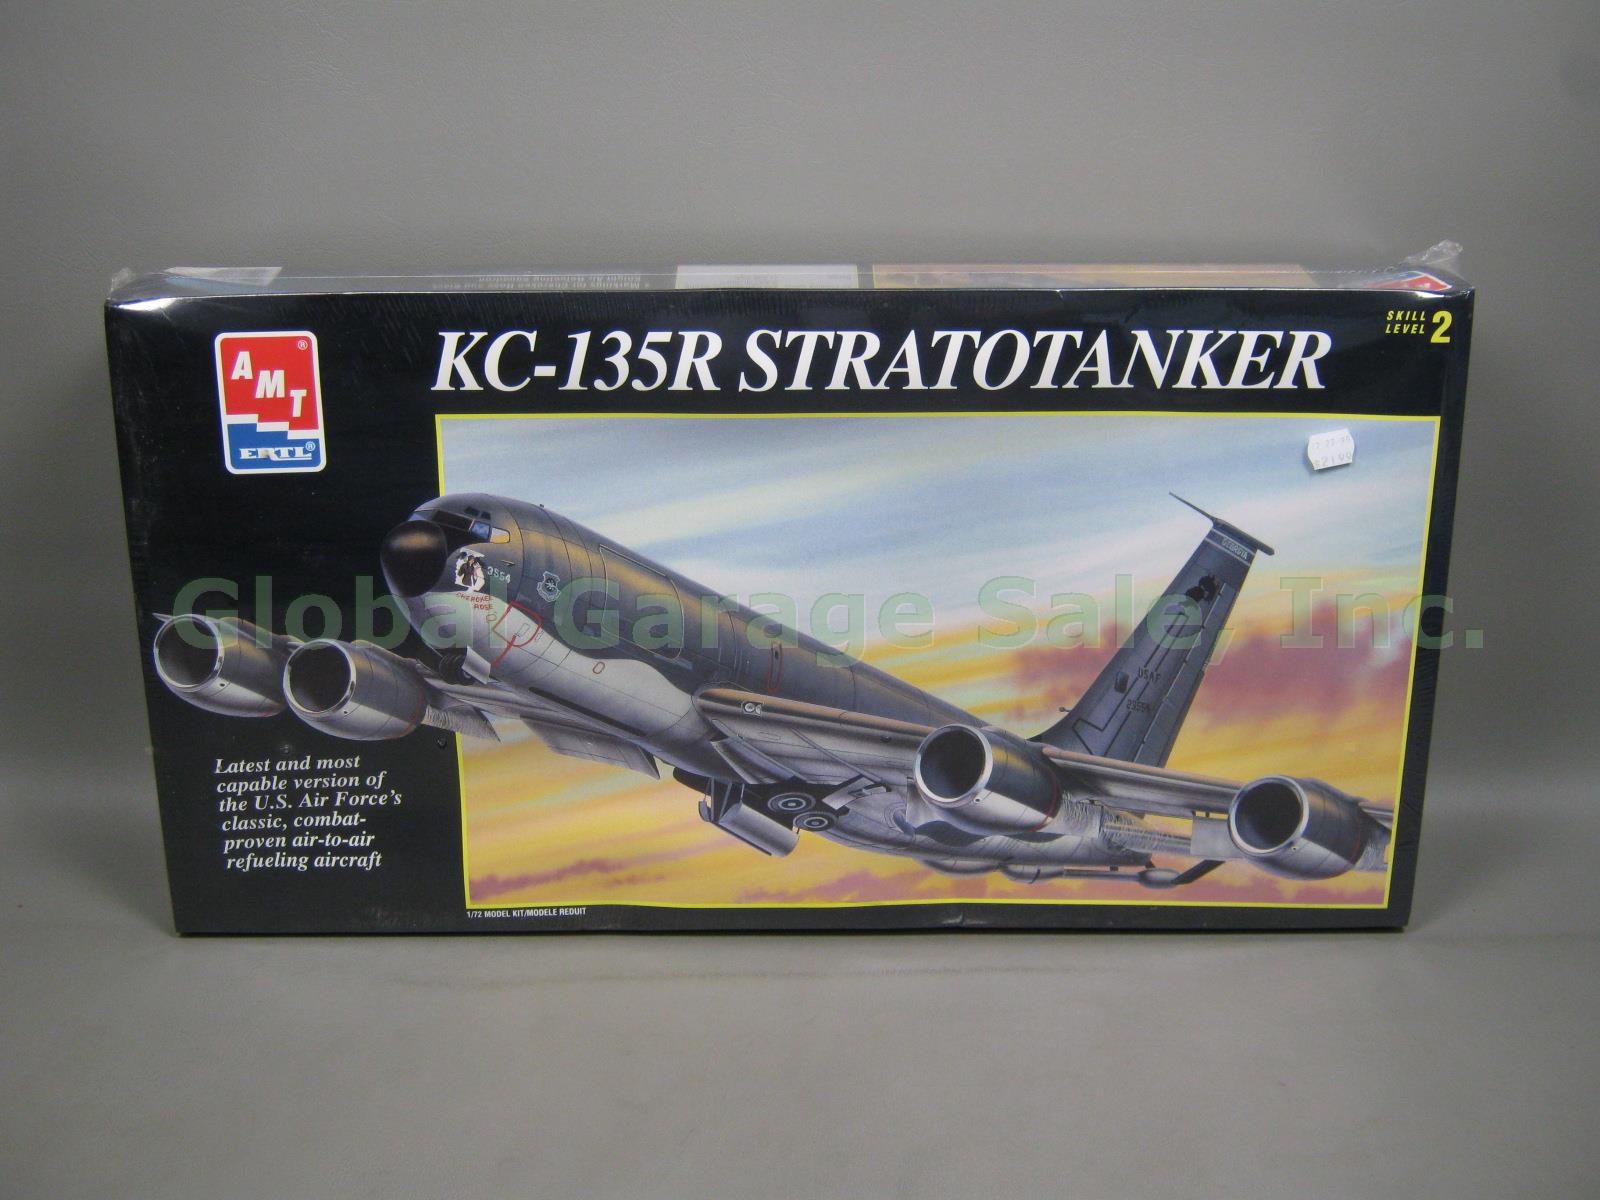 NOS Sealed AMT Ertl KC-135R Stratotanker 1/72 Plastic Model Airplane Kit 8909 NR